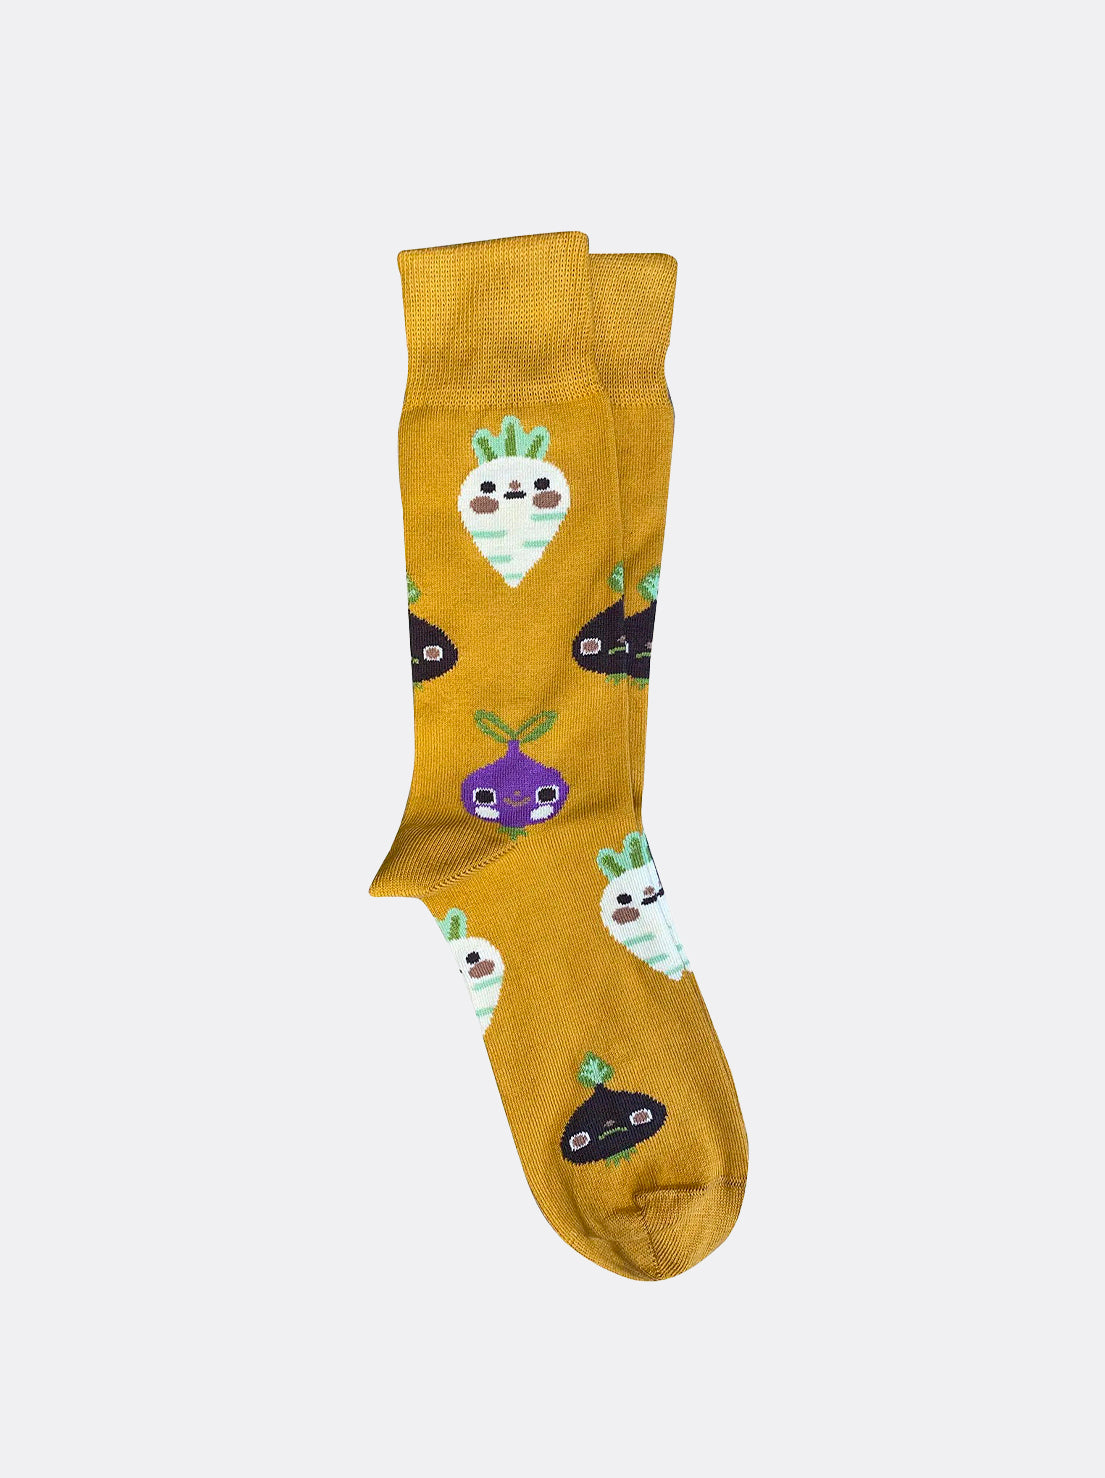 Tightology - Veggies Socks - Mustard